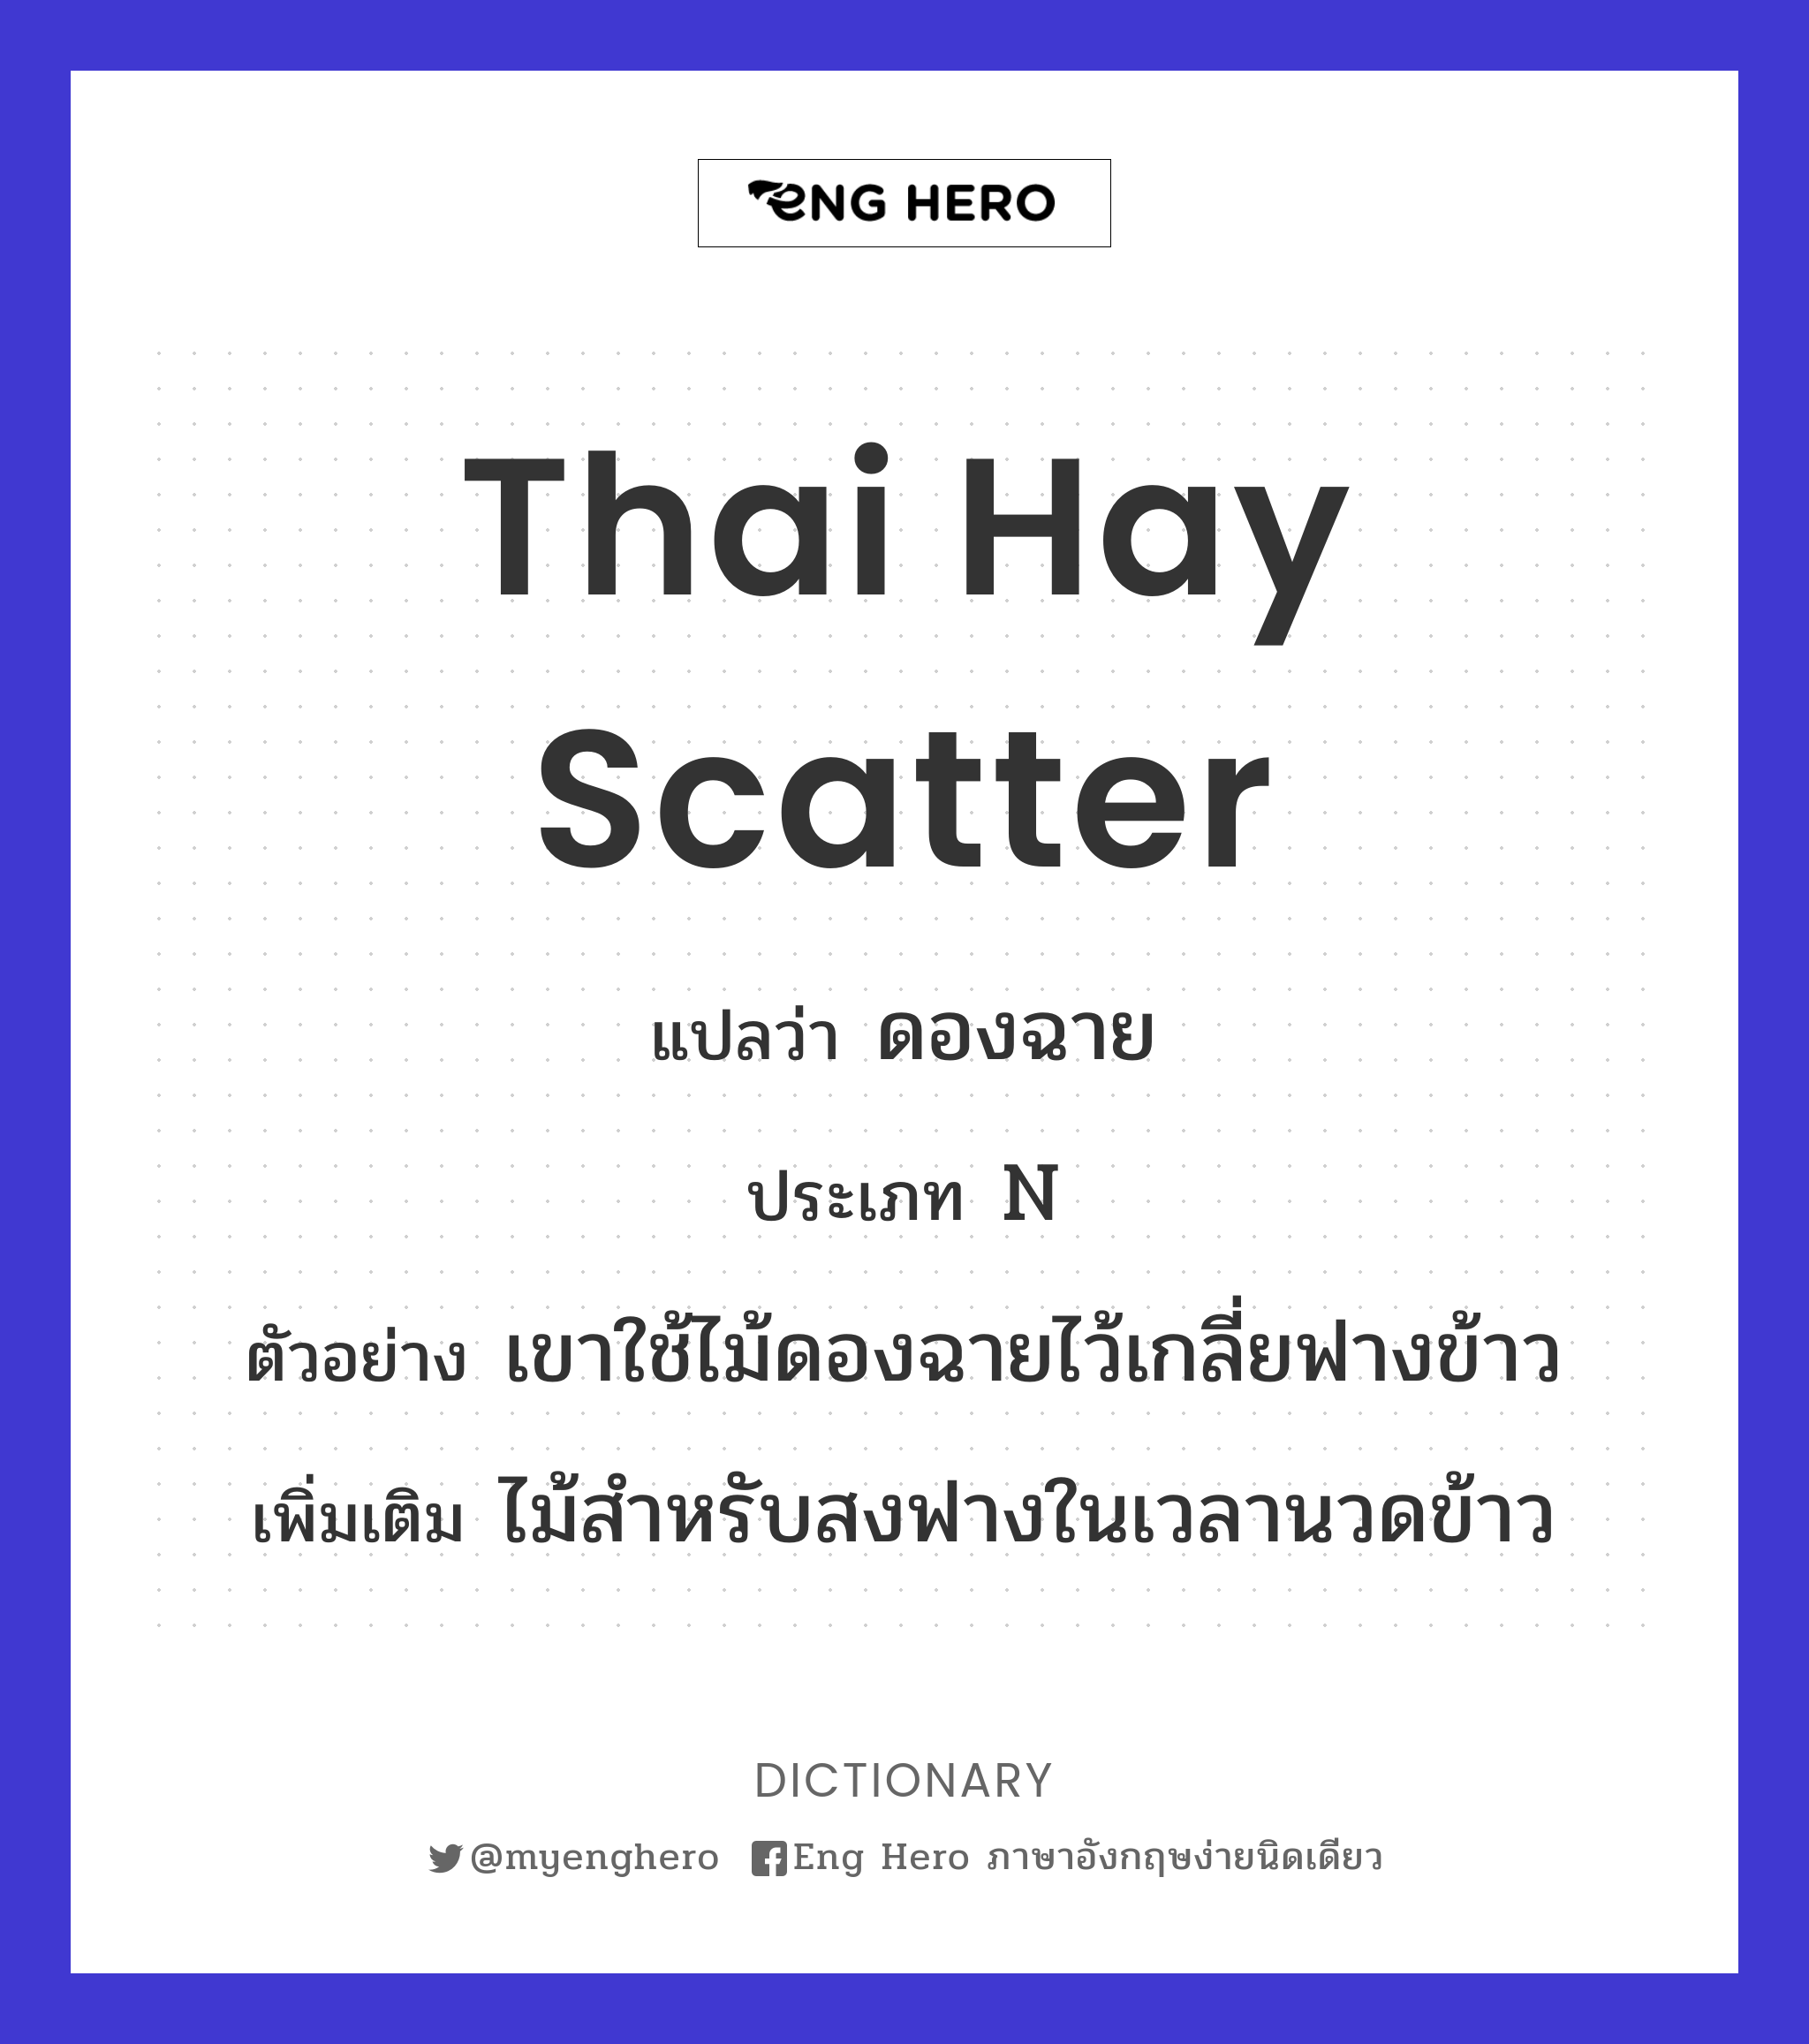 Thai hay scatter